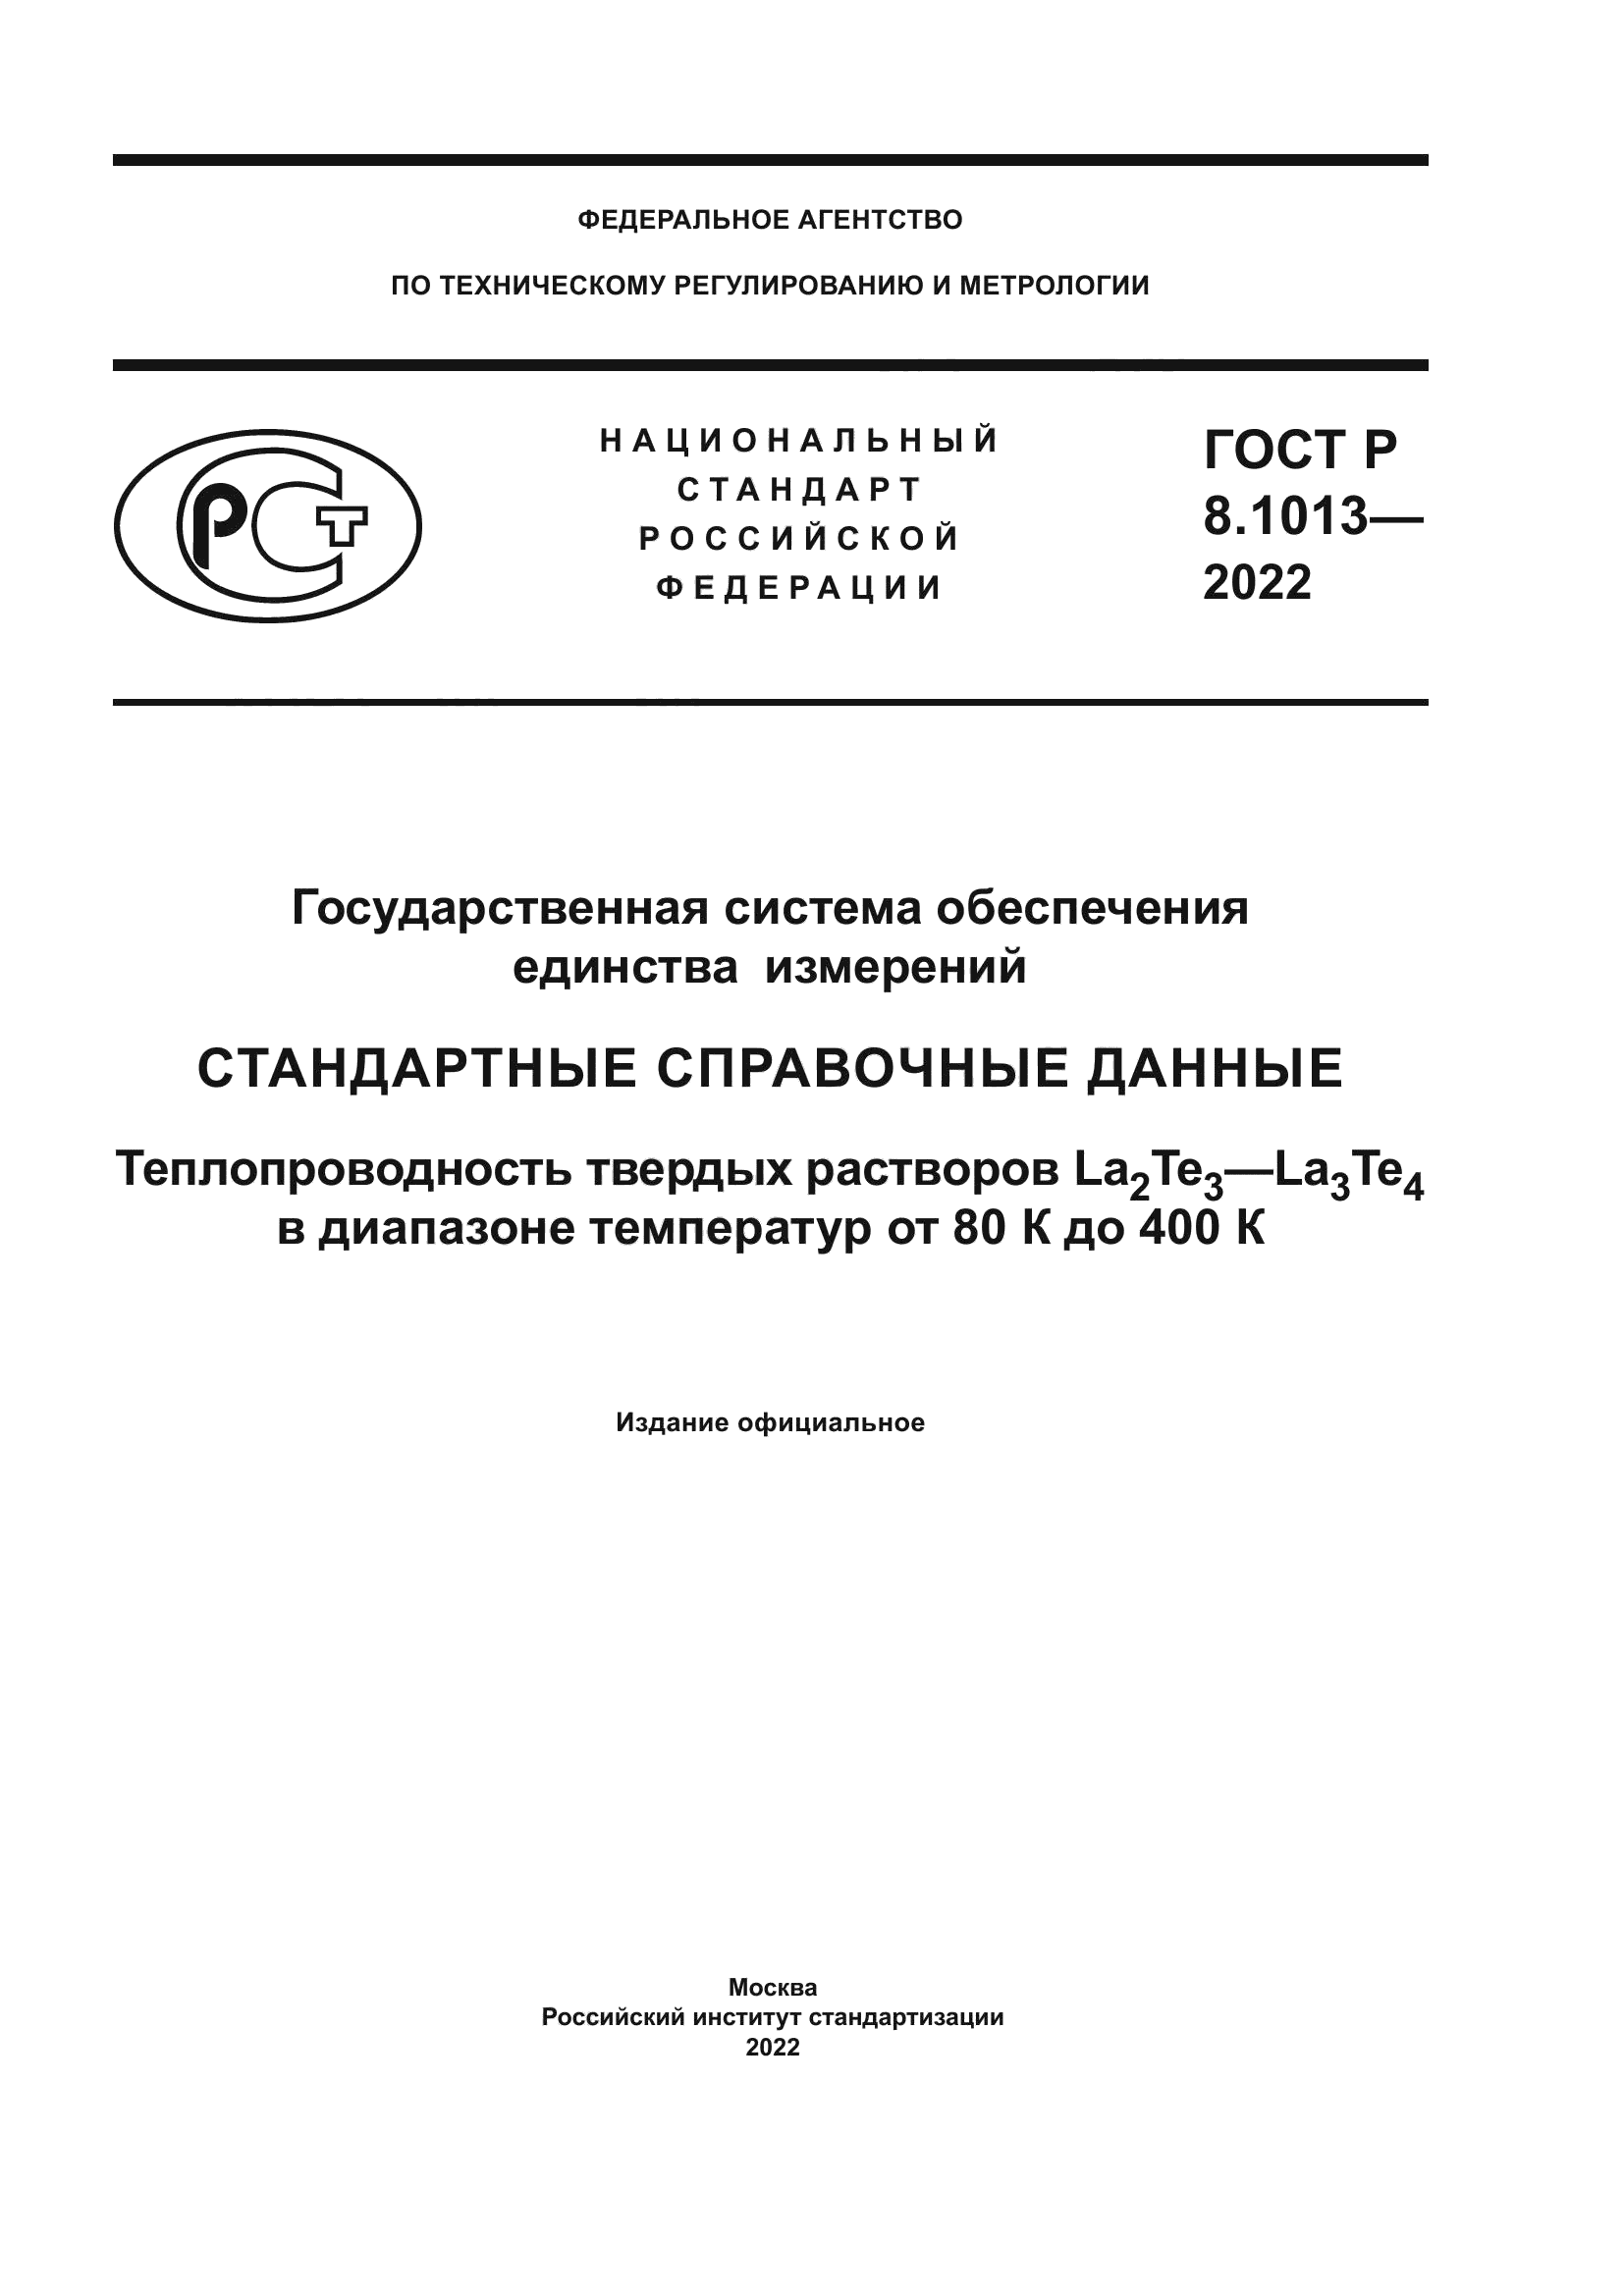 ГОСТ Р 8.1013-2022